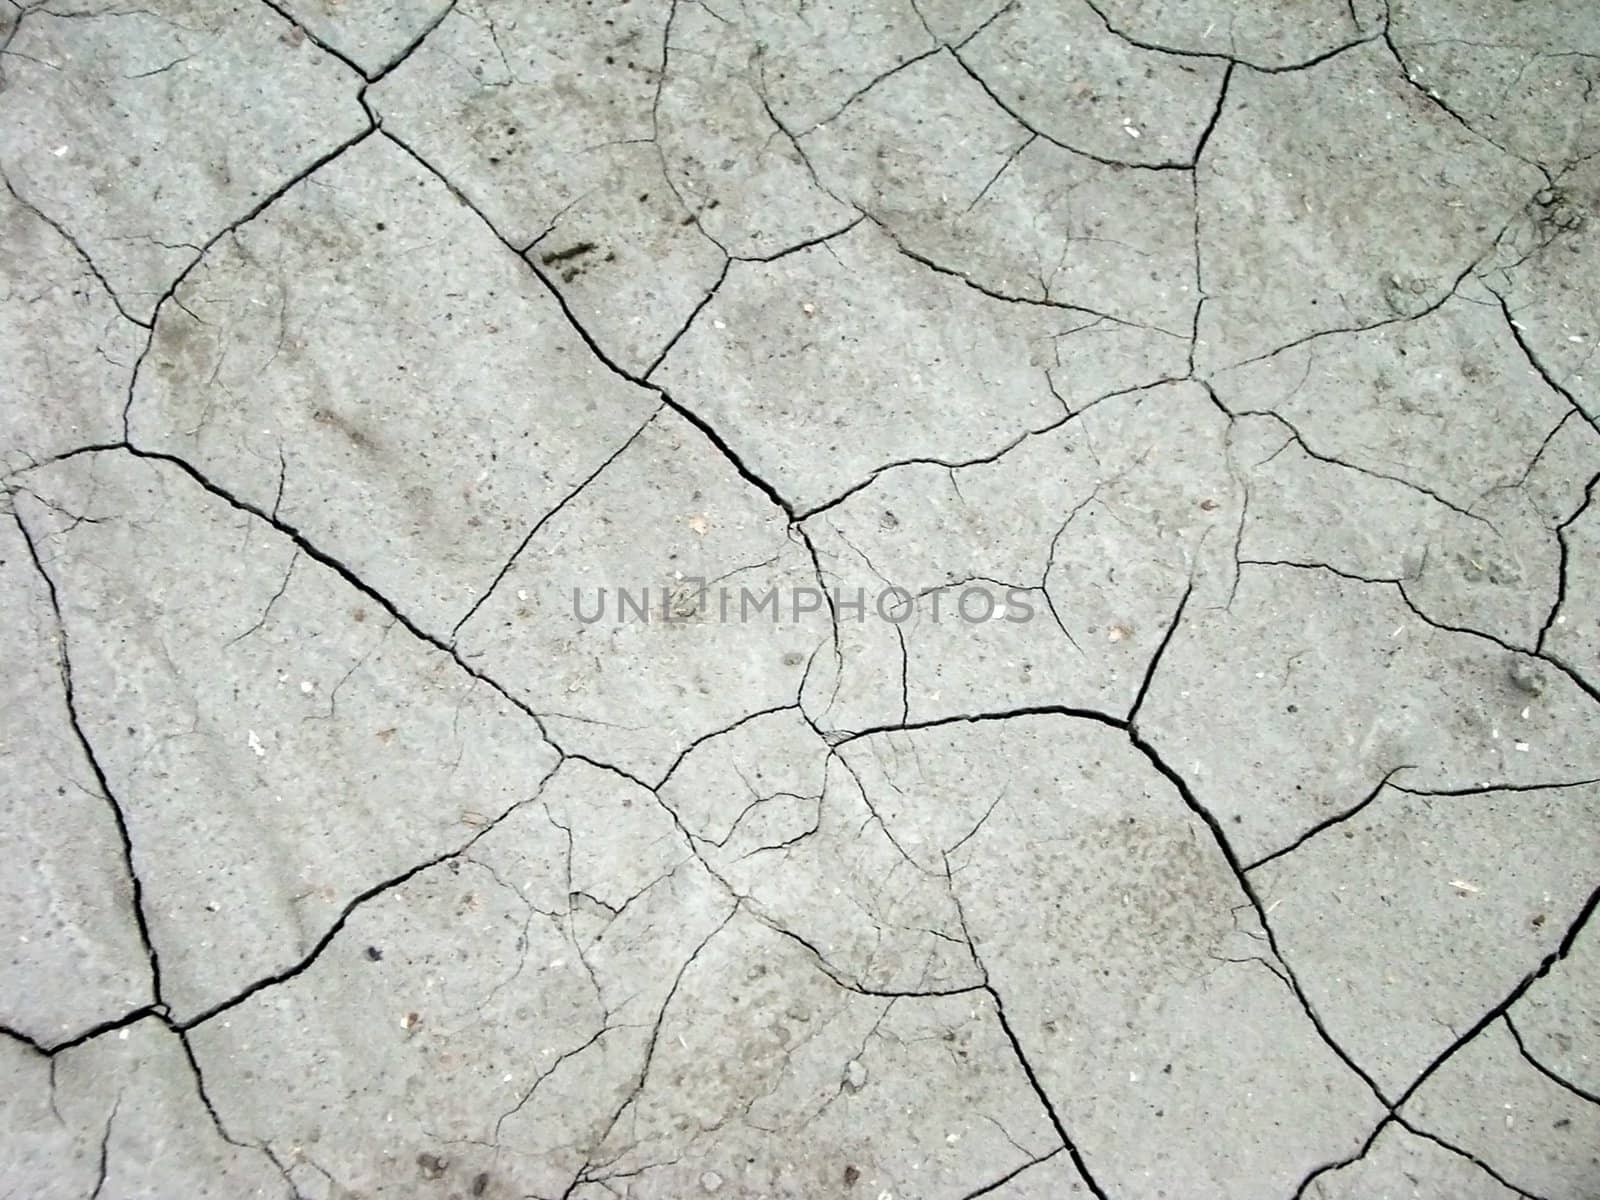 Dry ground, land, background, rifts, pattern by Viktoha